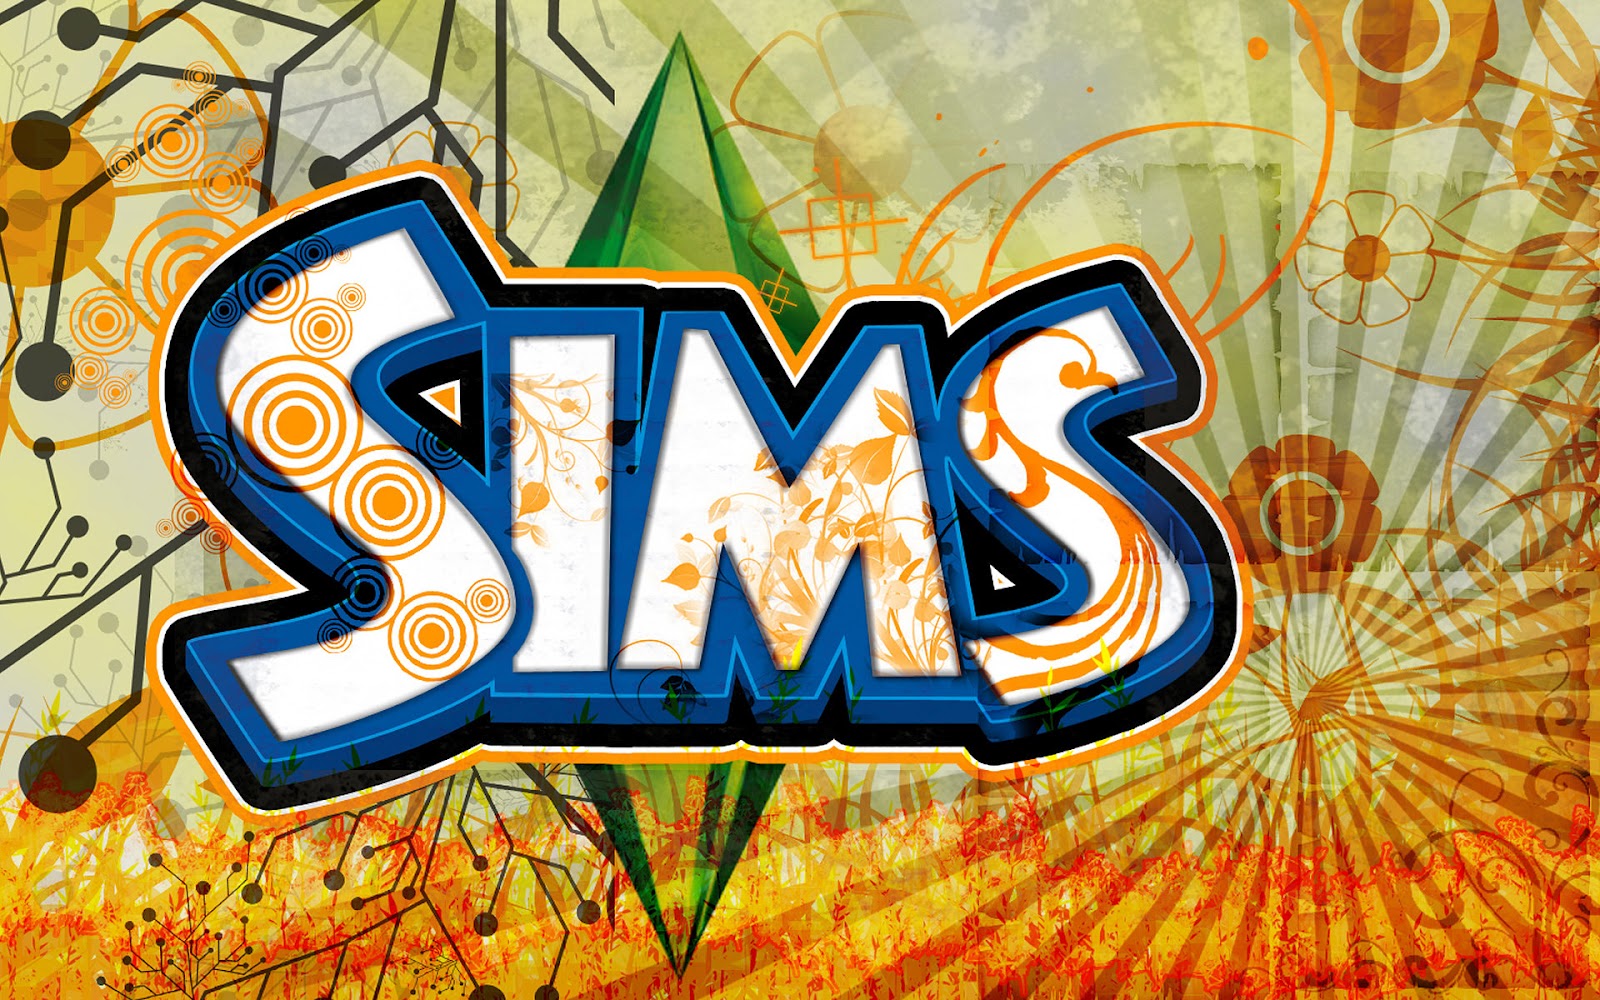 Sims fonds ecran